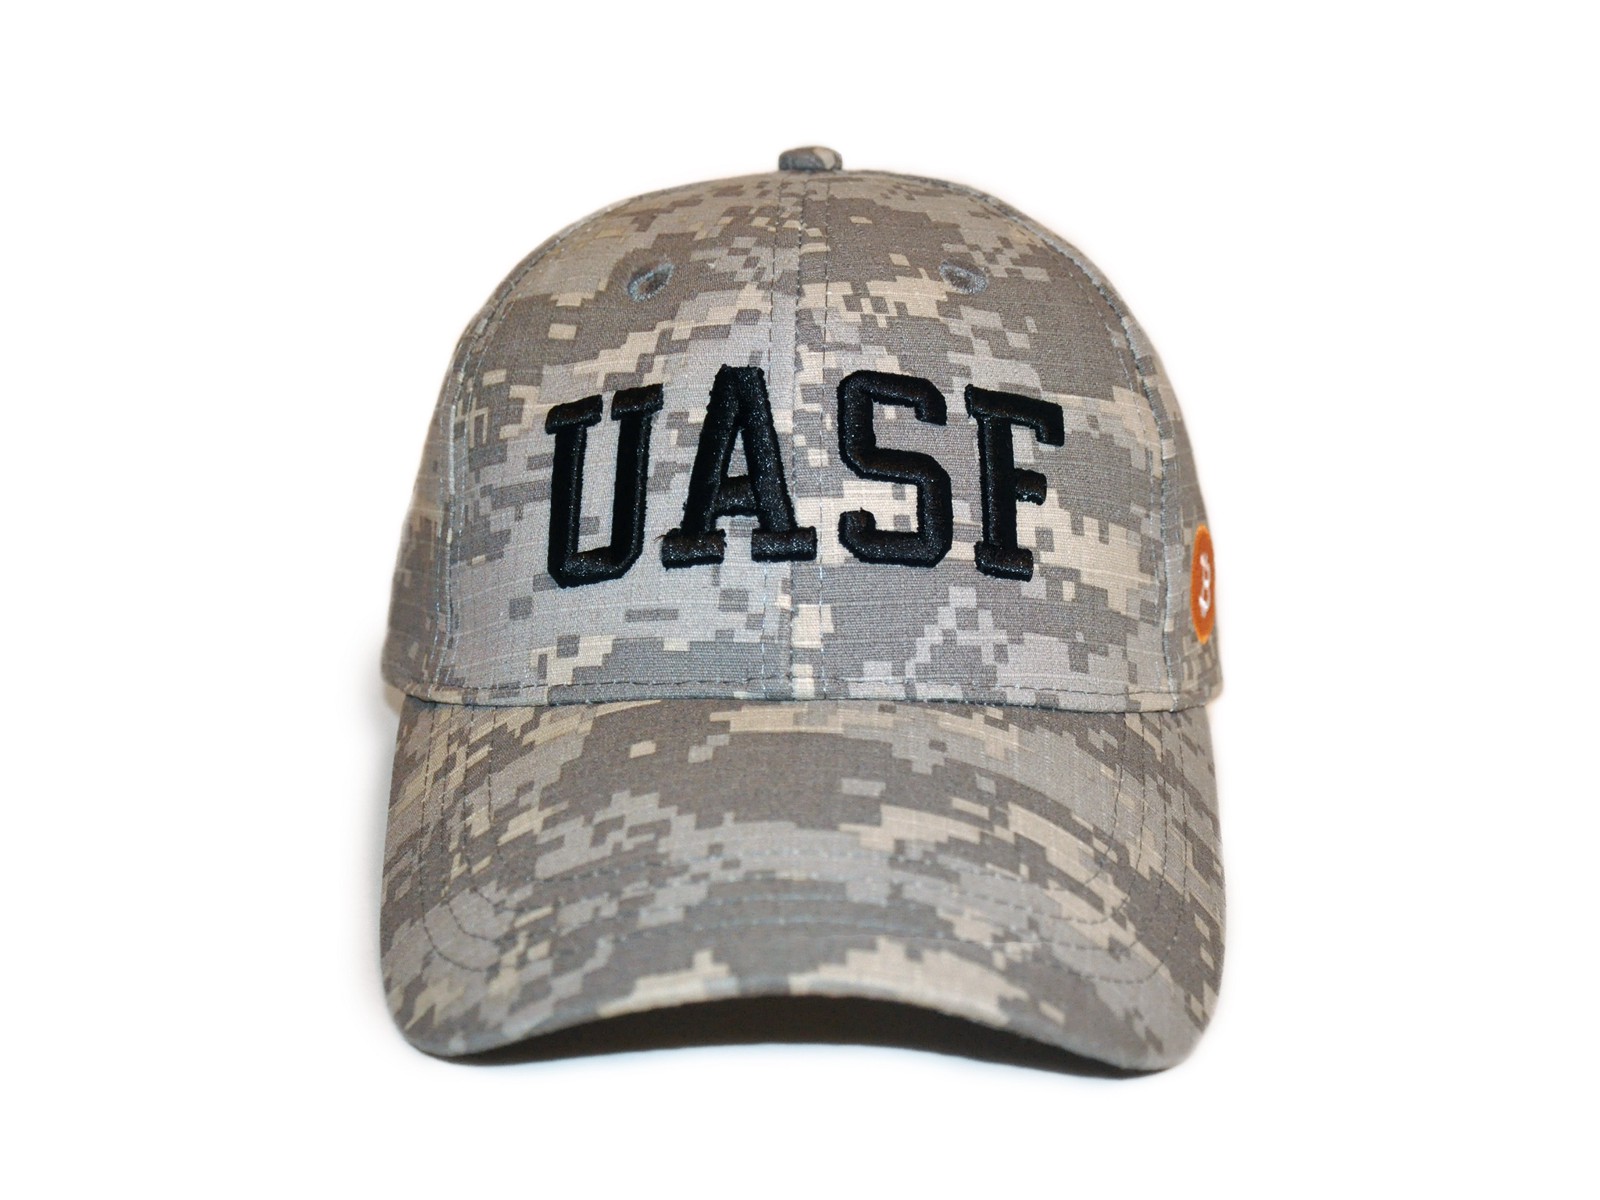 UASF (long: "user activated soft fork")